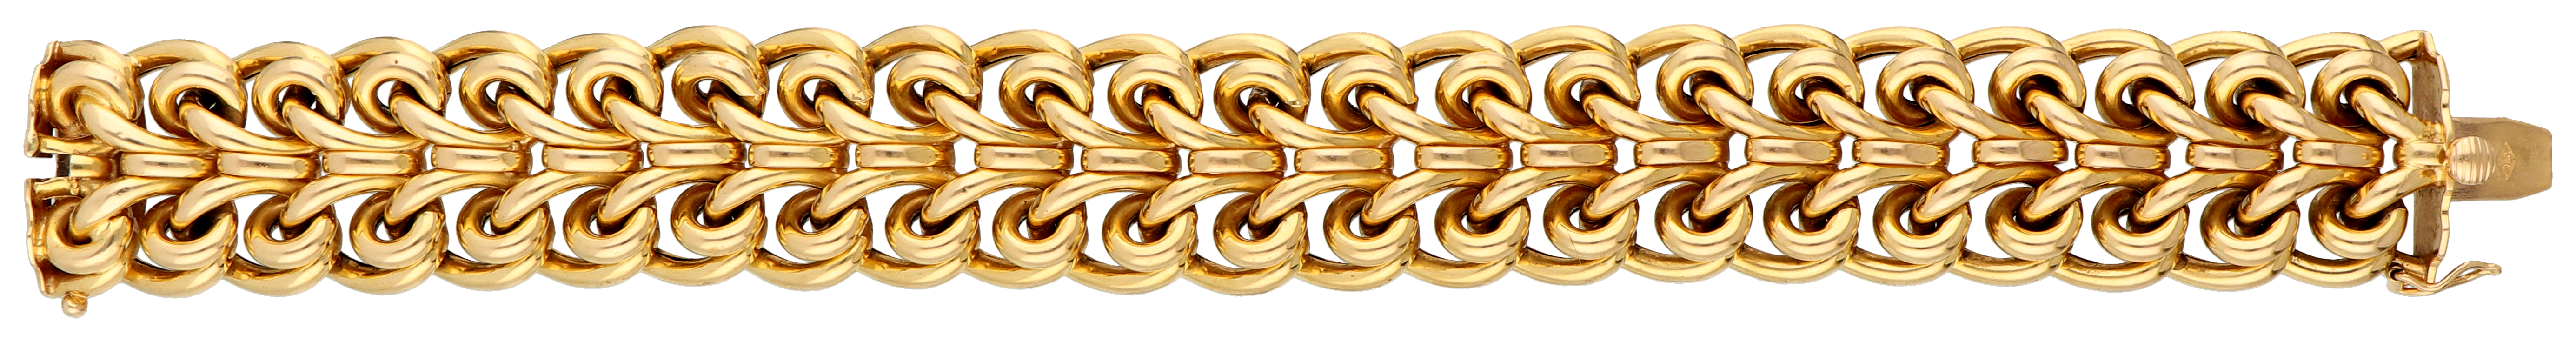 No Reserve - 18K Yellow gold link bracelet. - Image 3 of 3